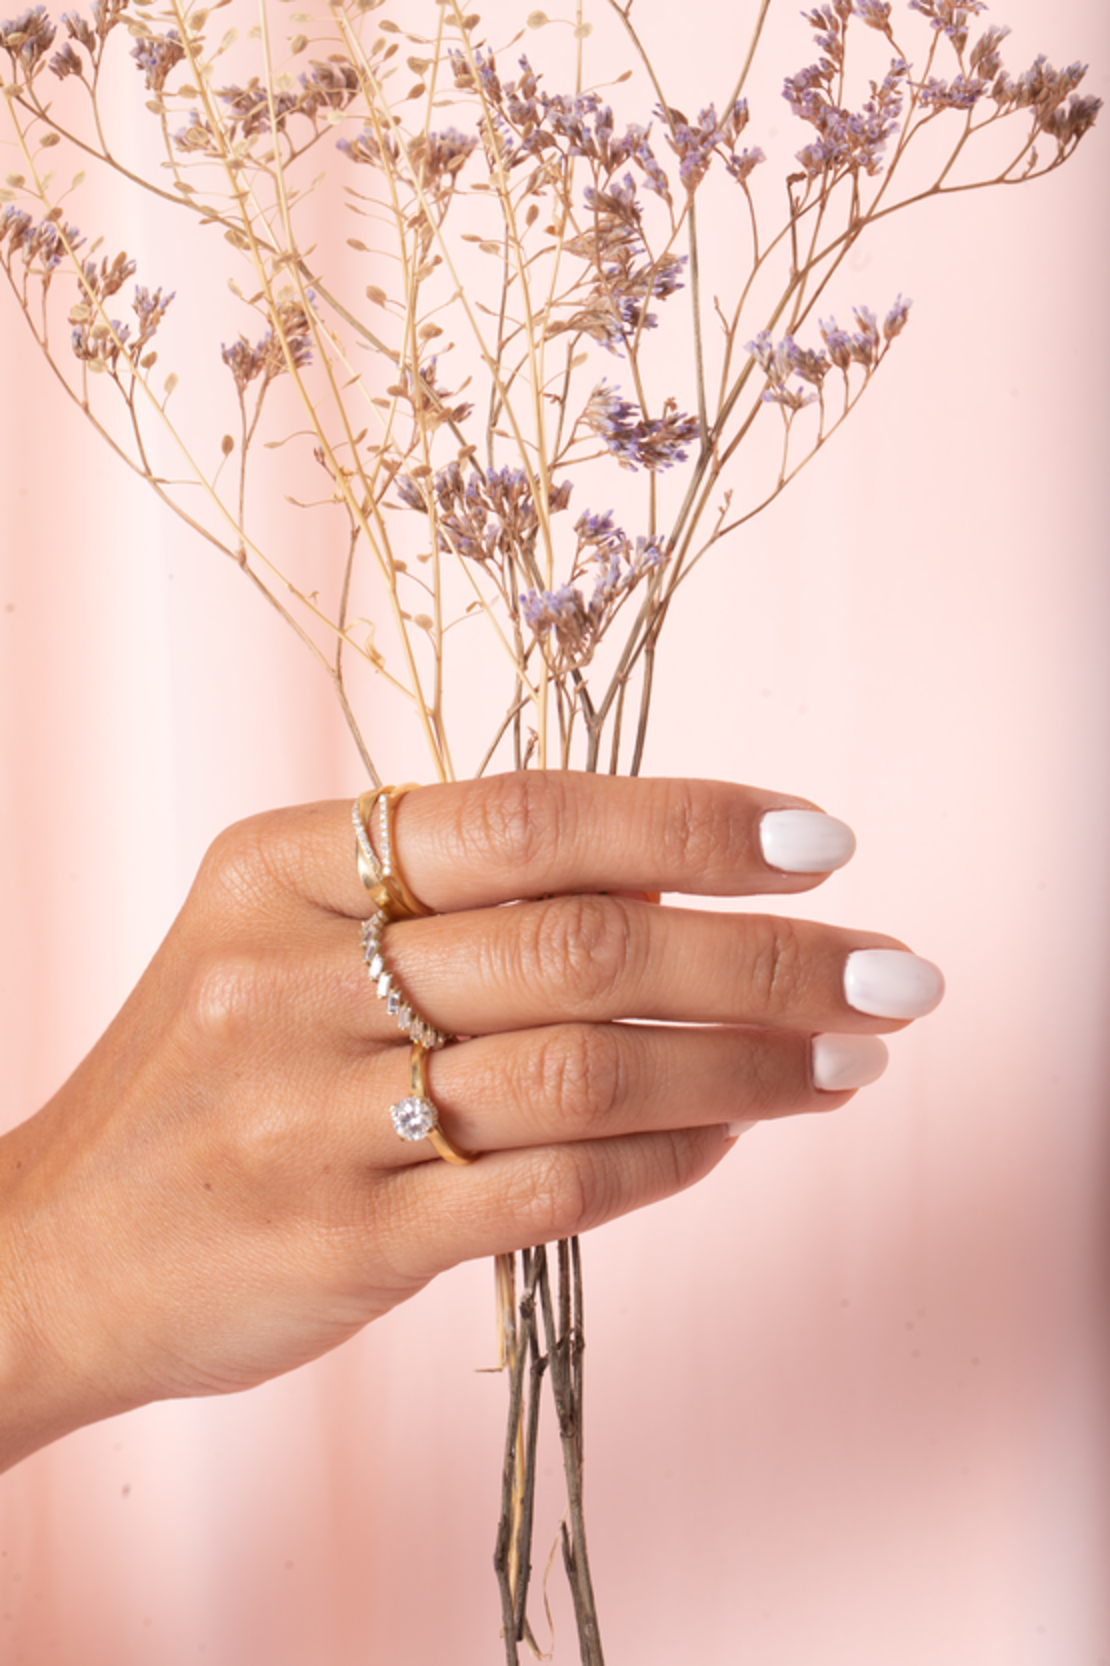 Shani Diamonds Ring